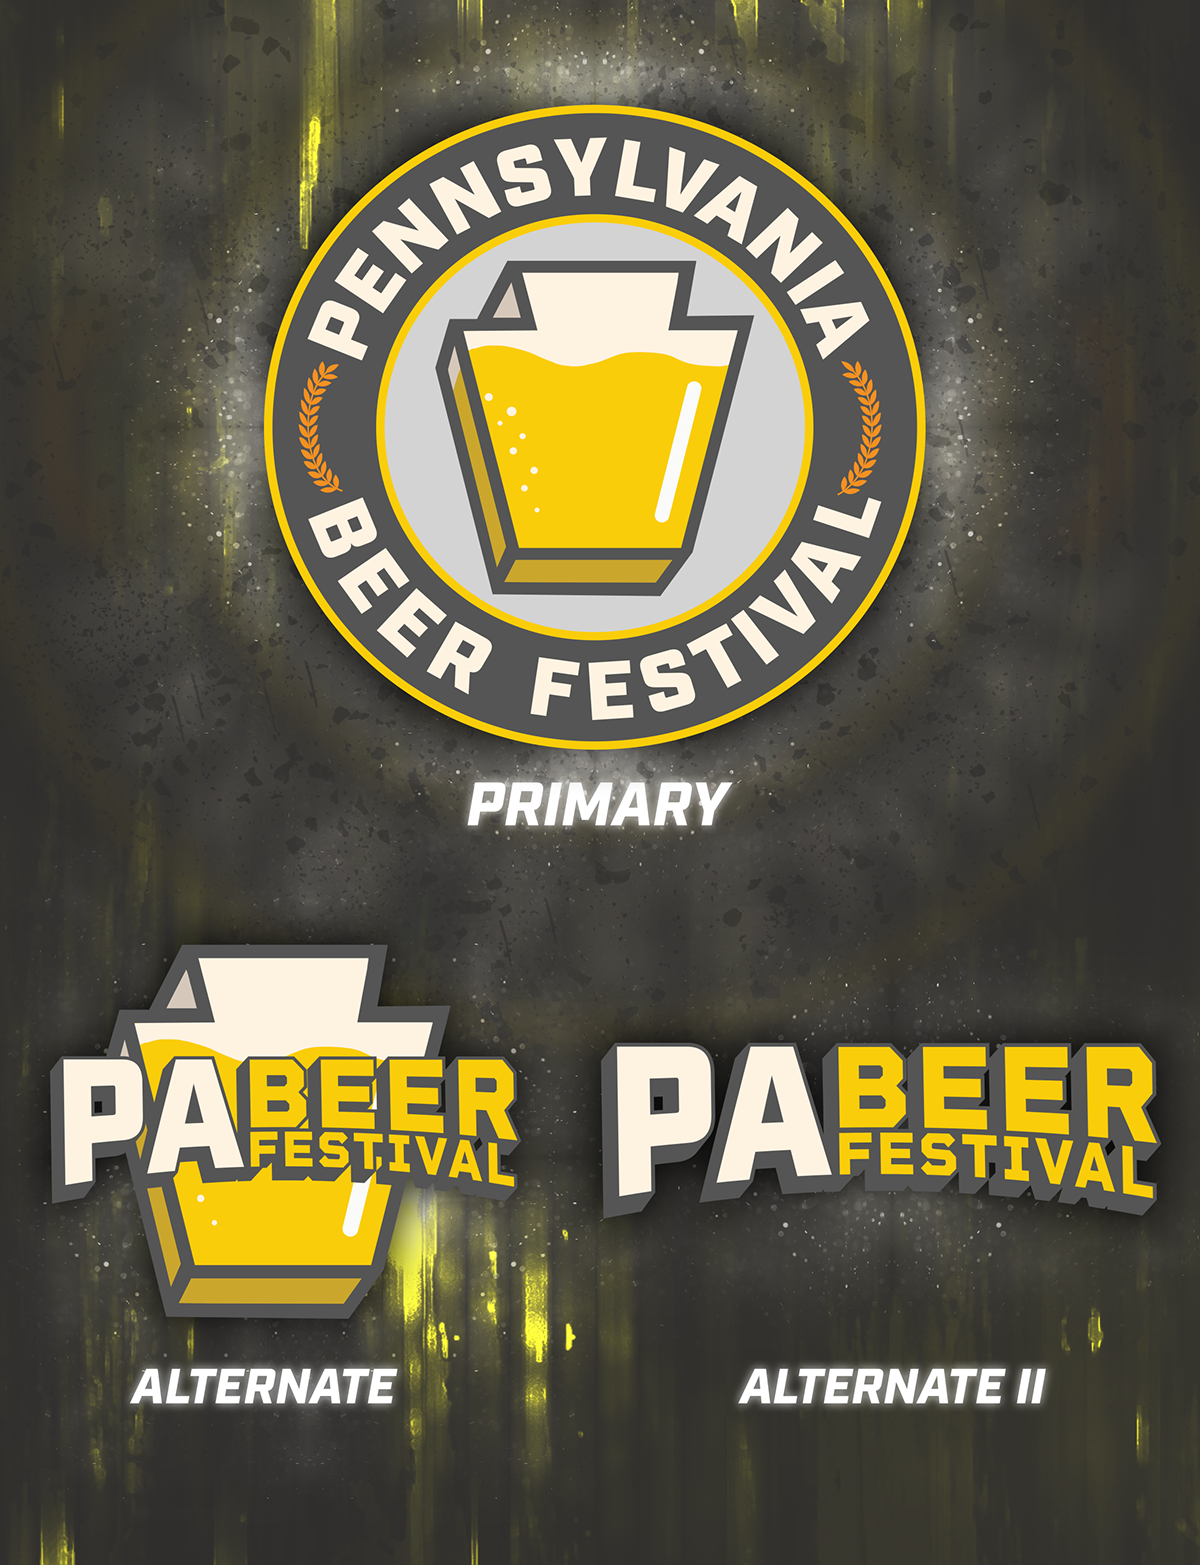 Nick Gross Pennsylvania Beer Festival Official Logo